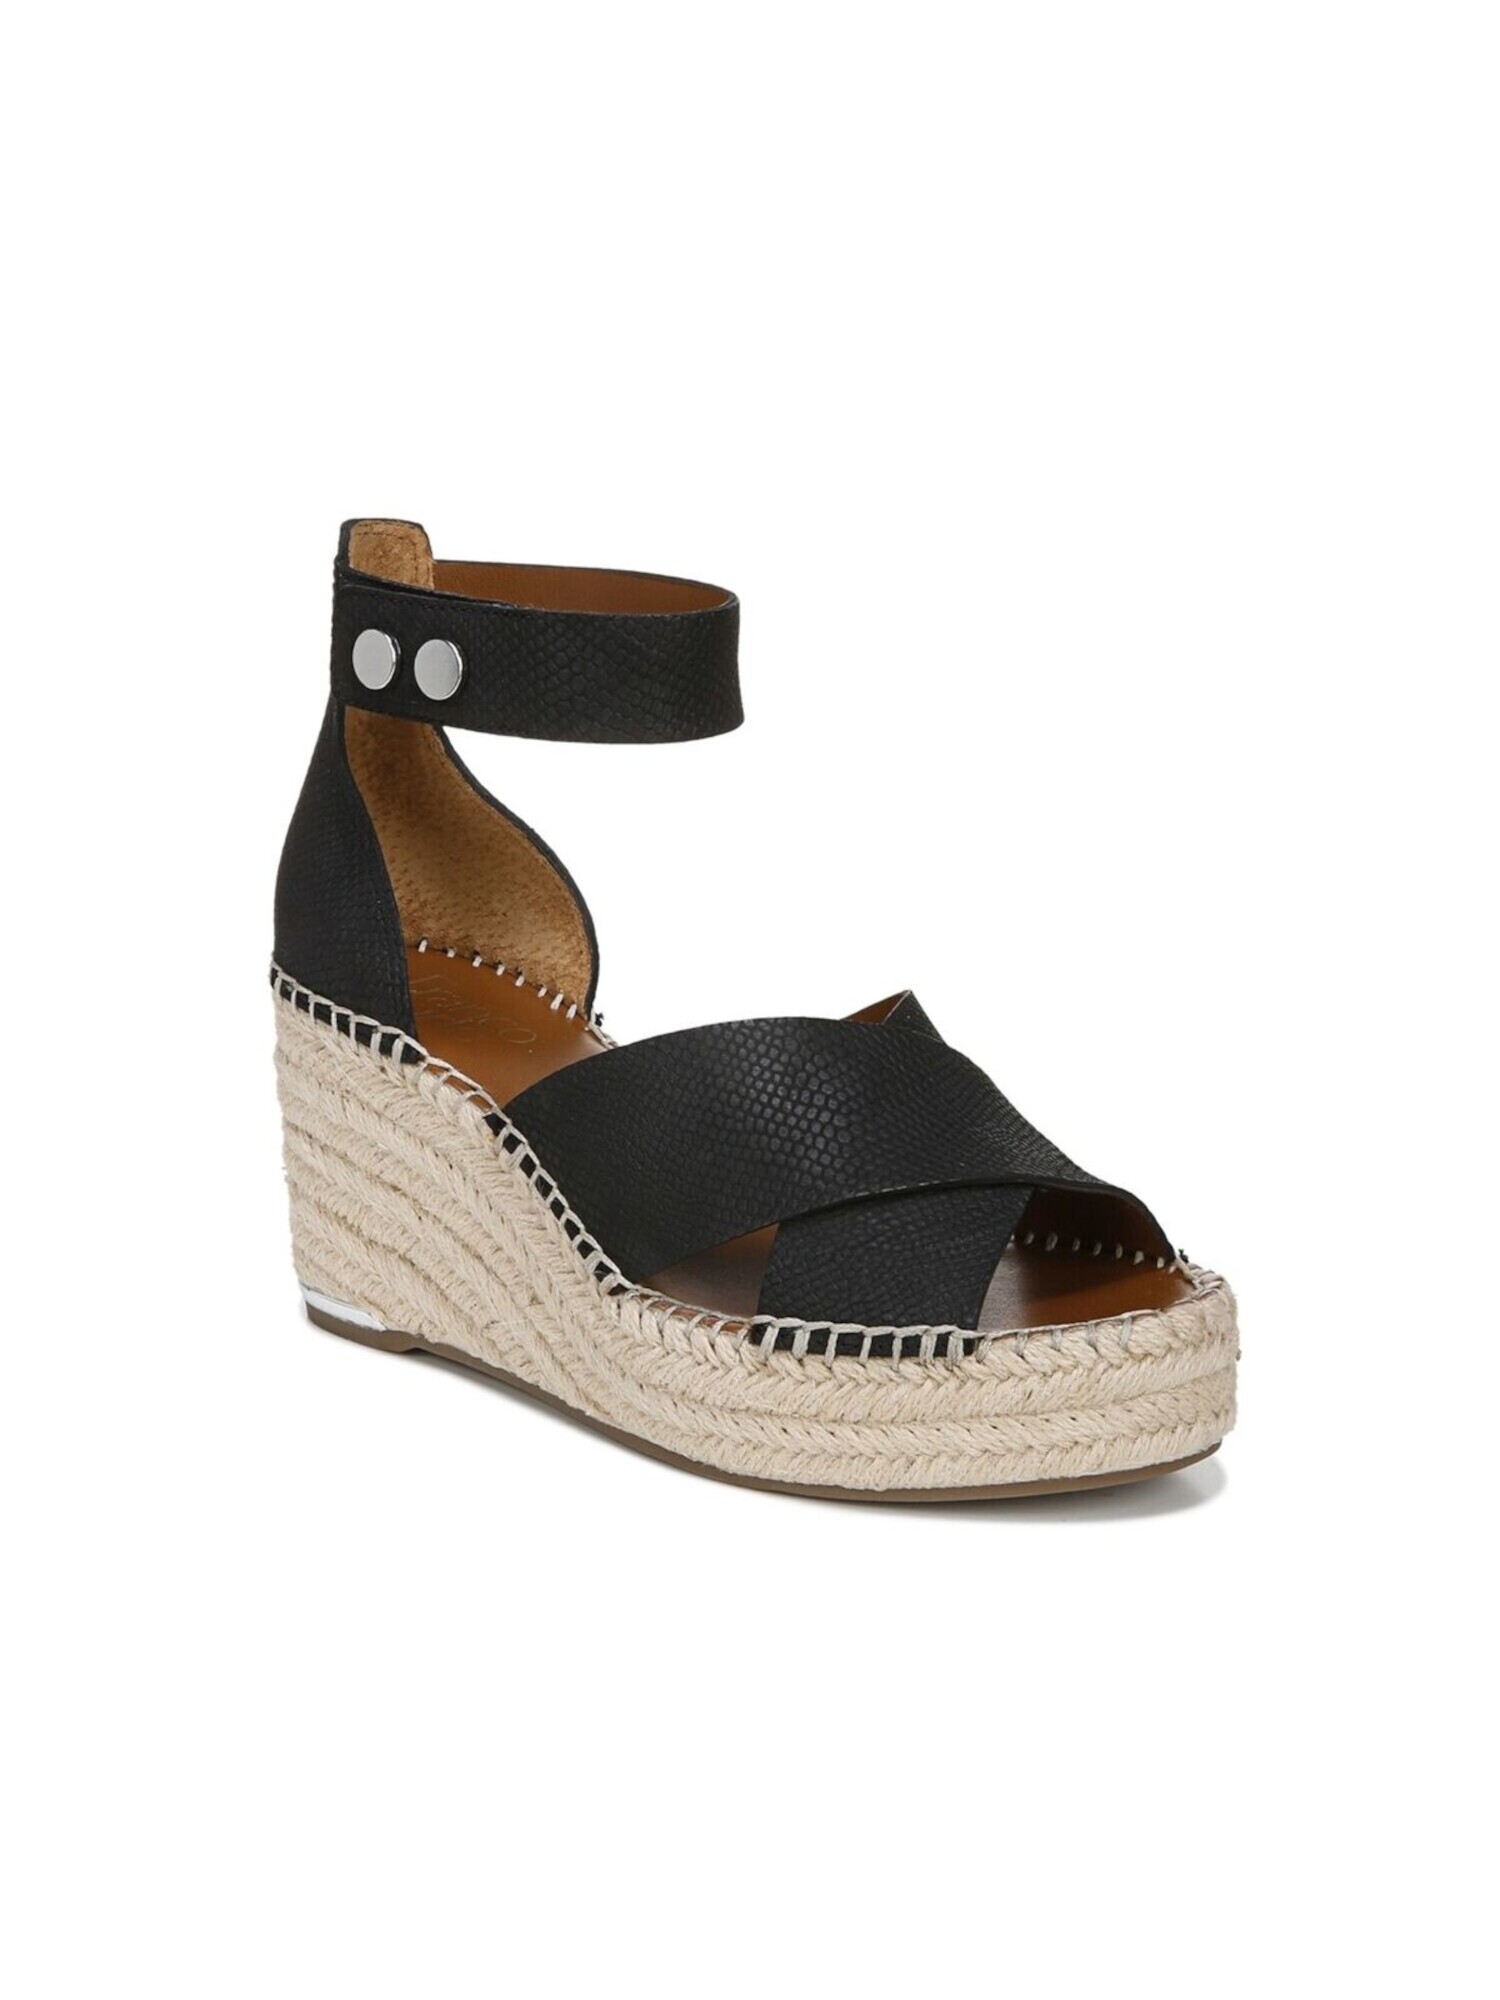 FRANCO SARTO Womens Black Snake 1" Platform Ankle Strap Carma Almond Toe Wedge Leather Espadrille Shoes 9.5 M